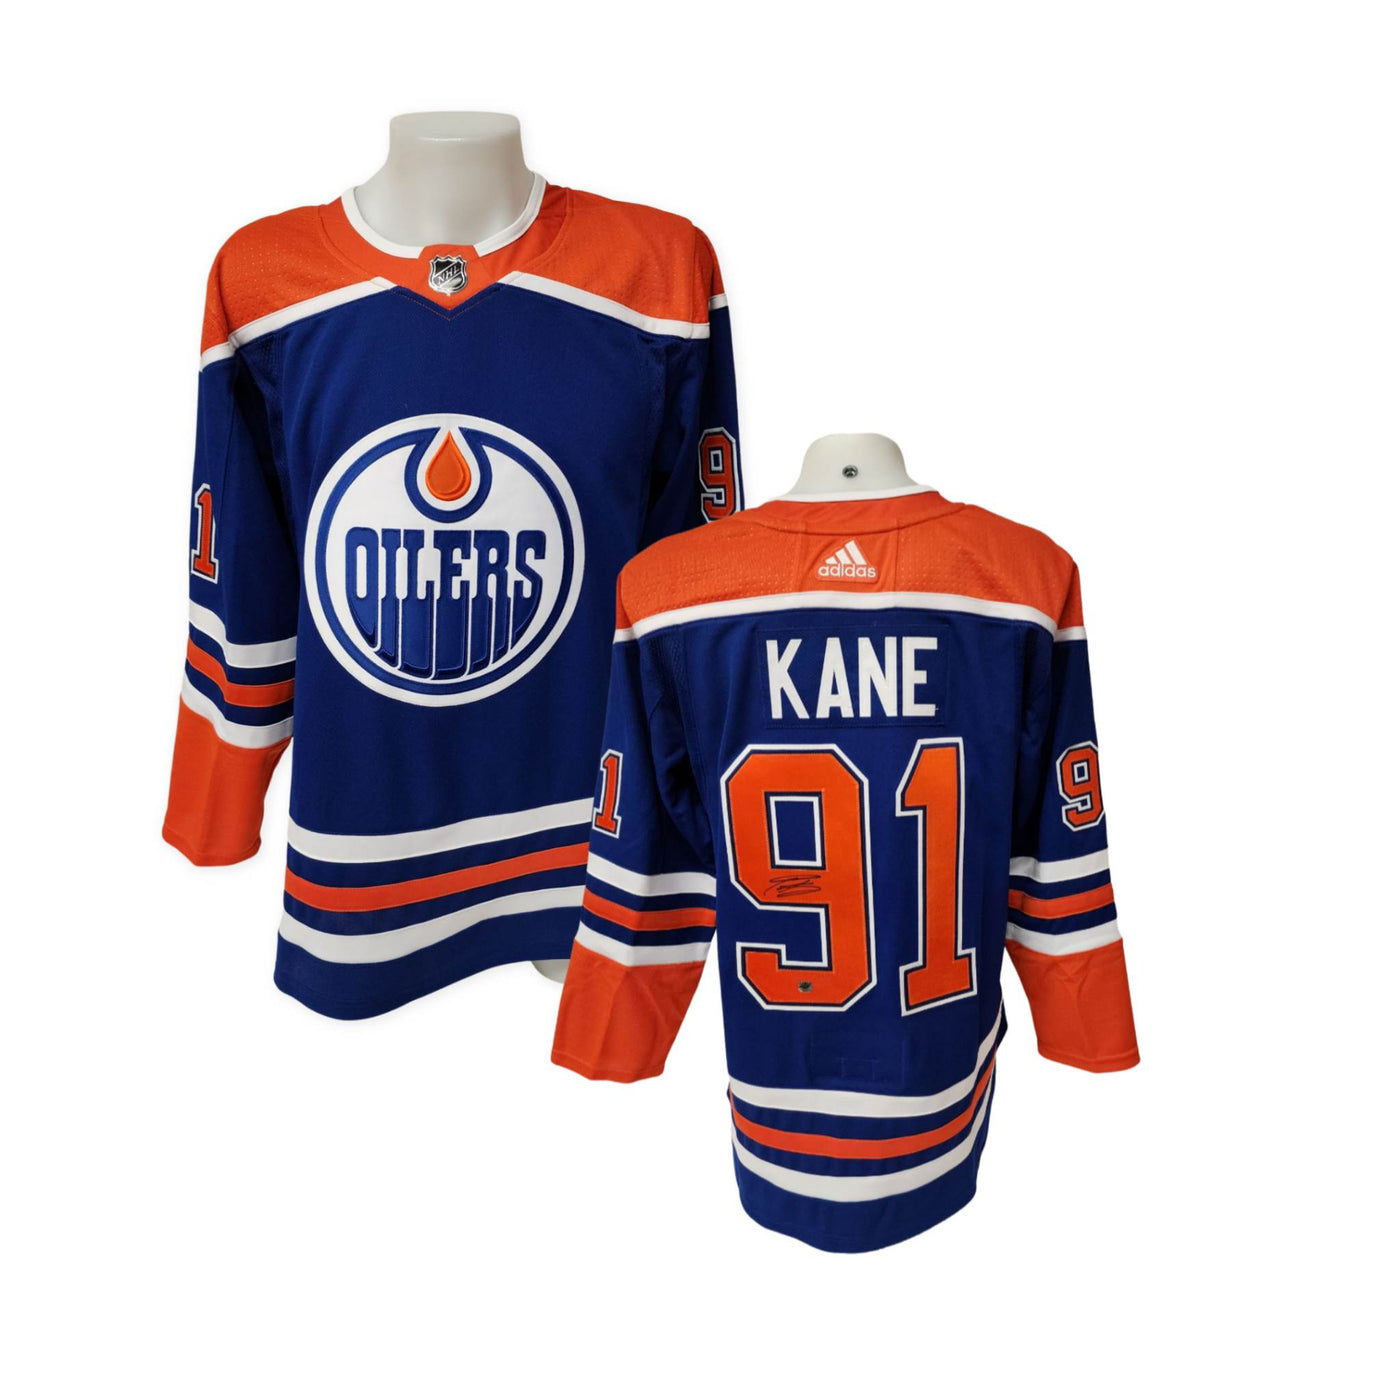 Evander Kane Edmonton Oilers Home Adidas Jersey